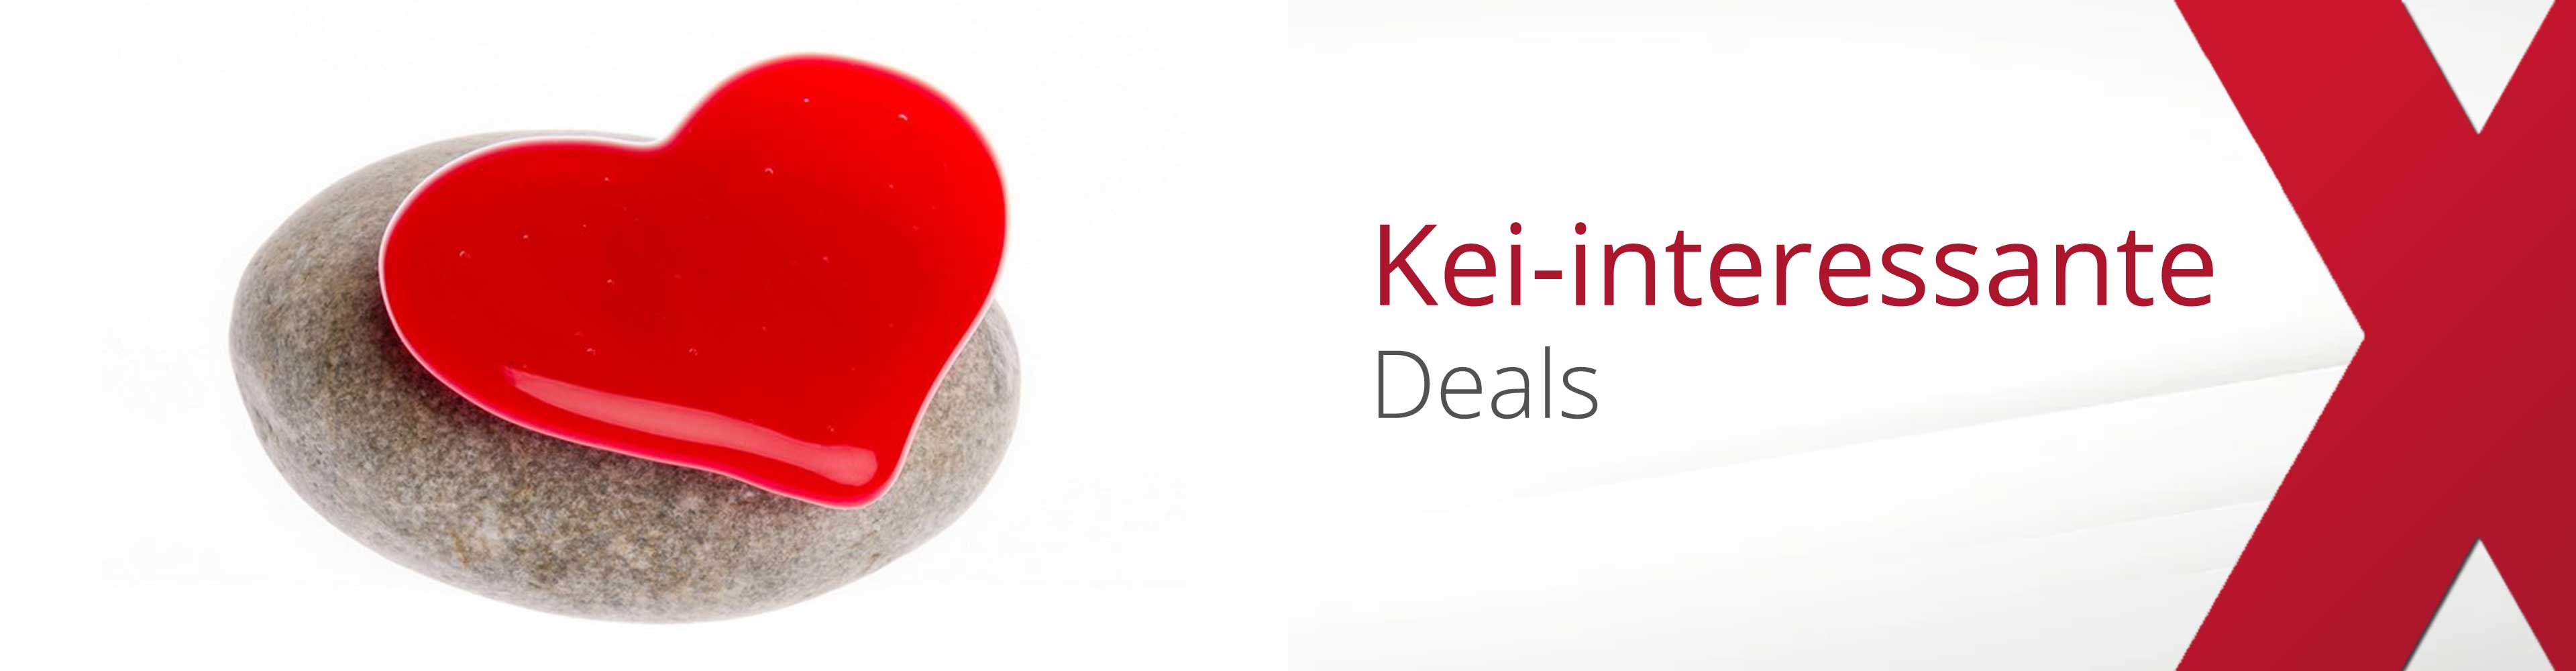 Merkmal | Kei-interessante Deals